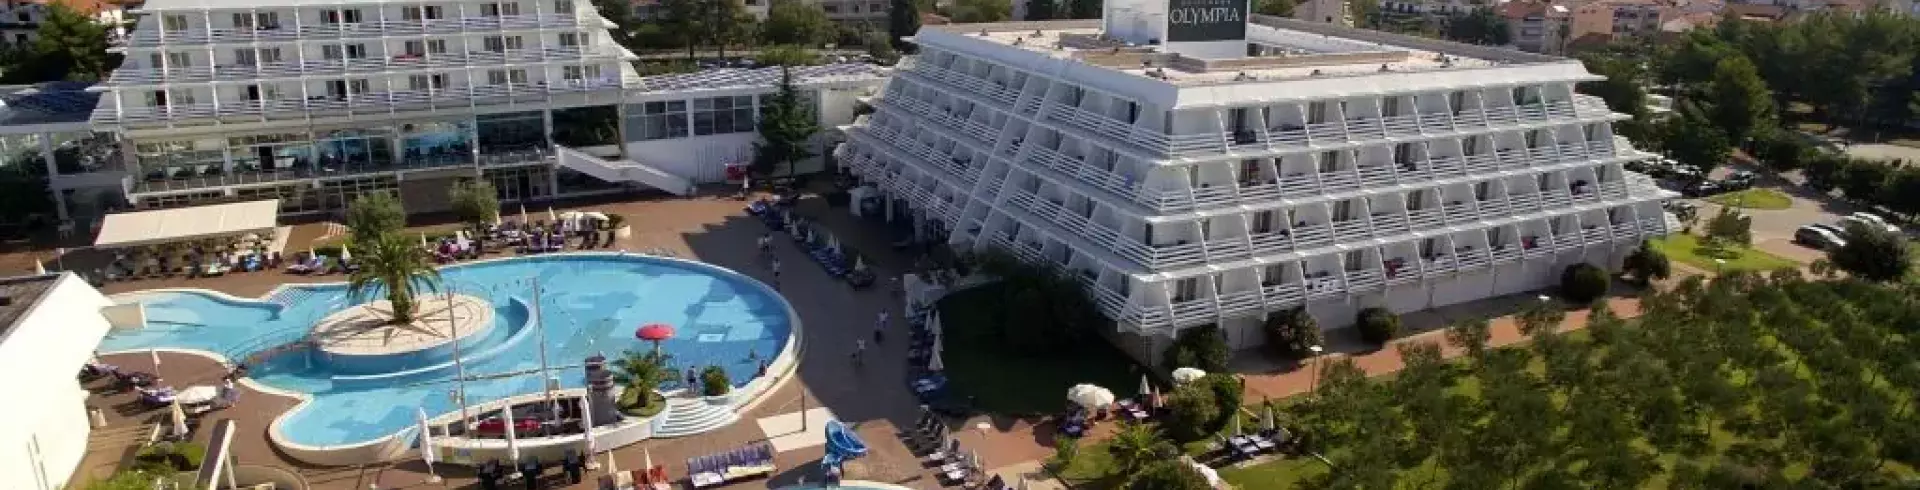 Hotel OLYMPIA